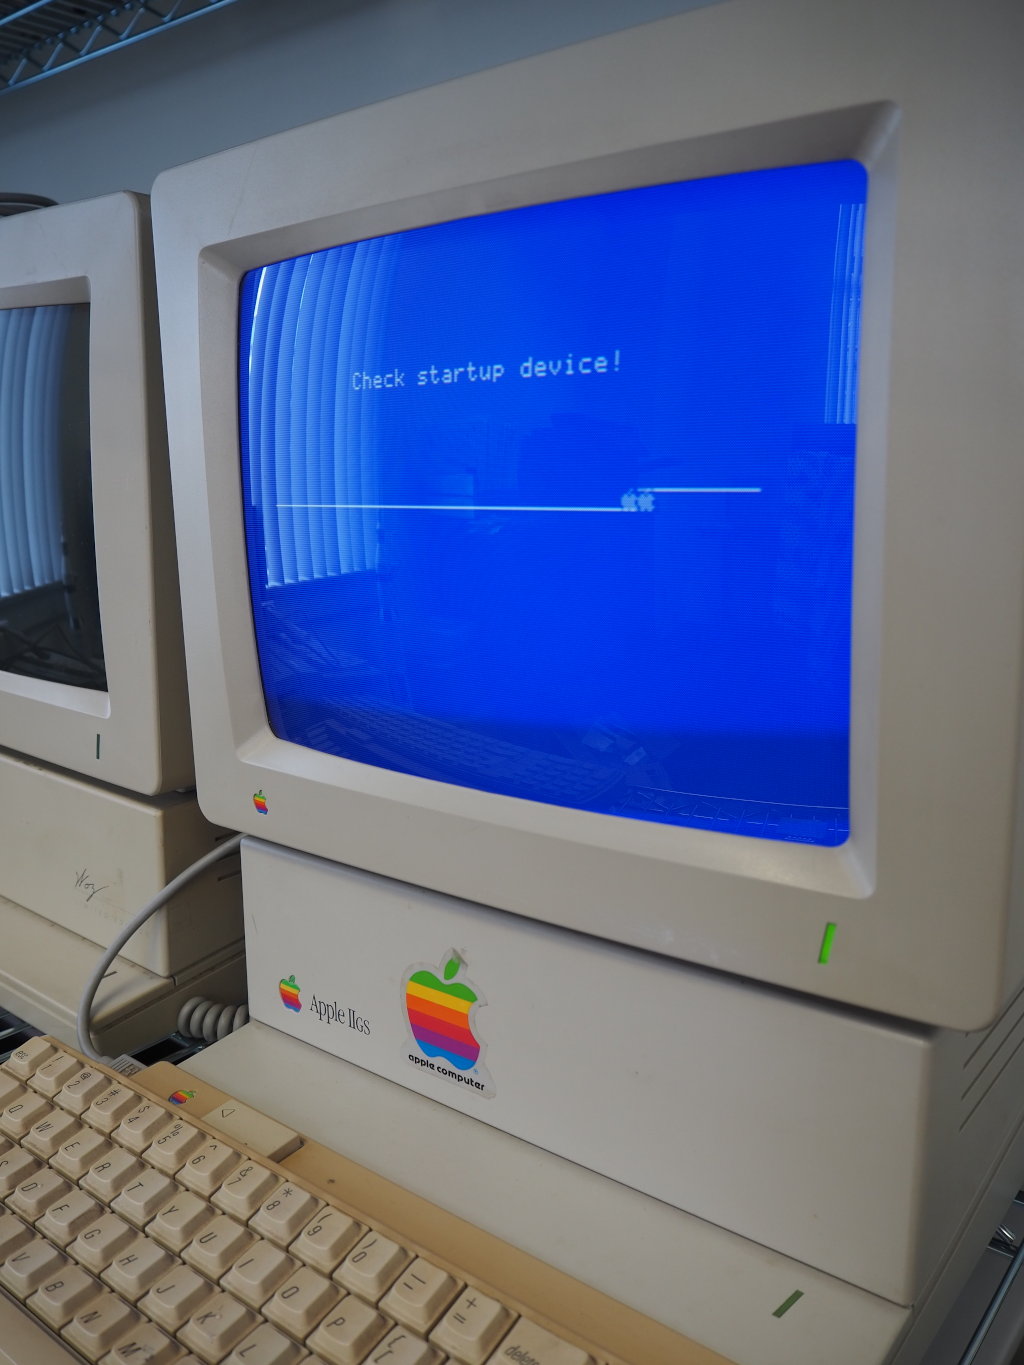 Apple IIGS "check startup device"